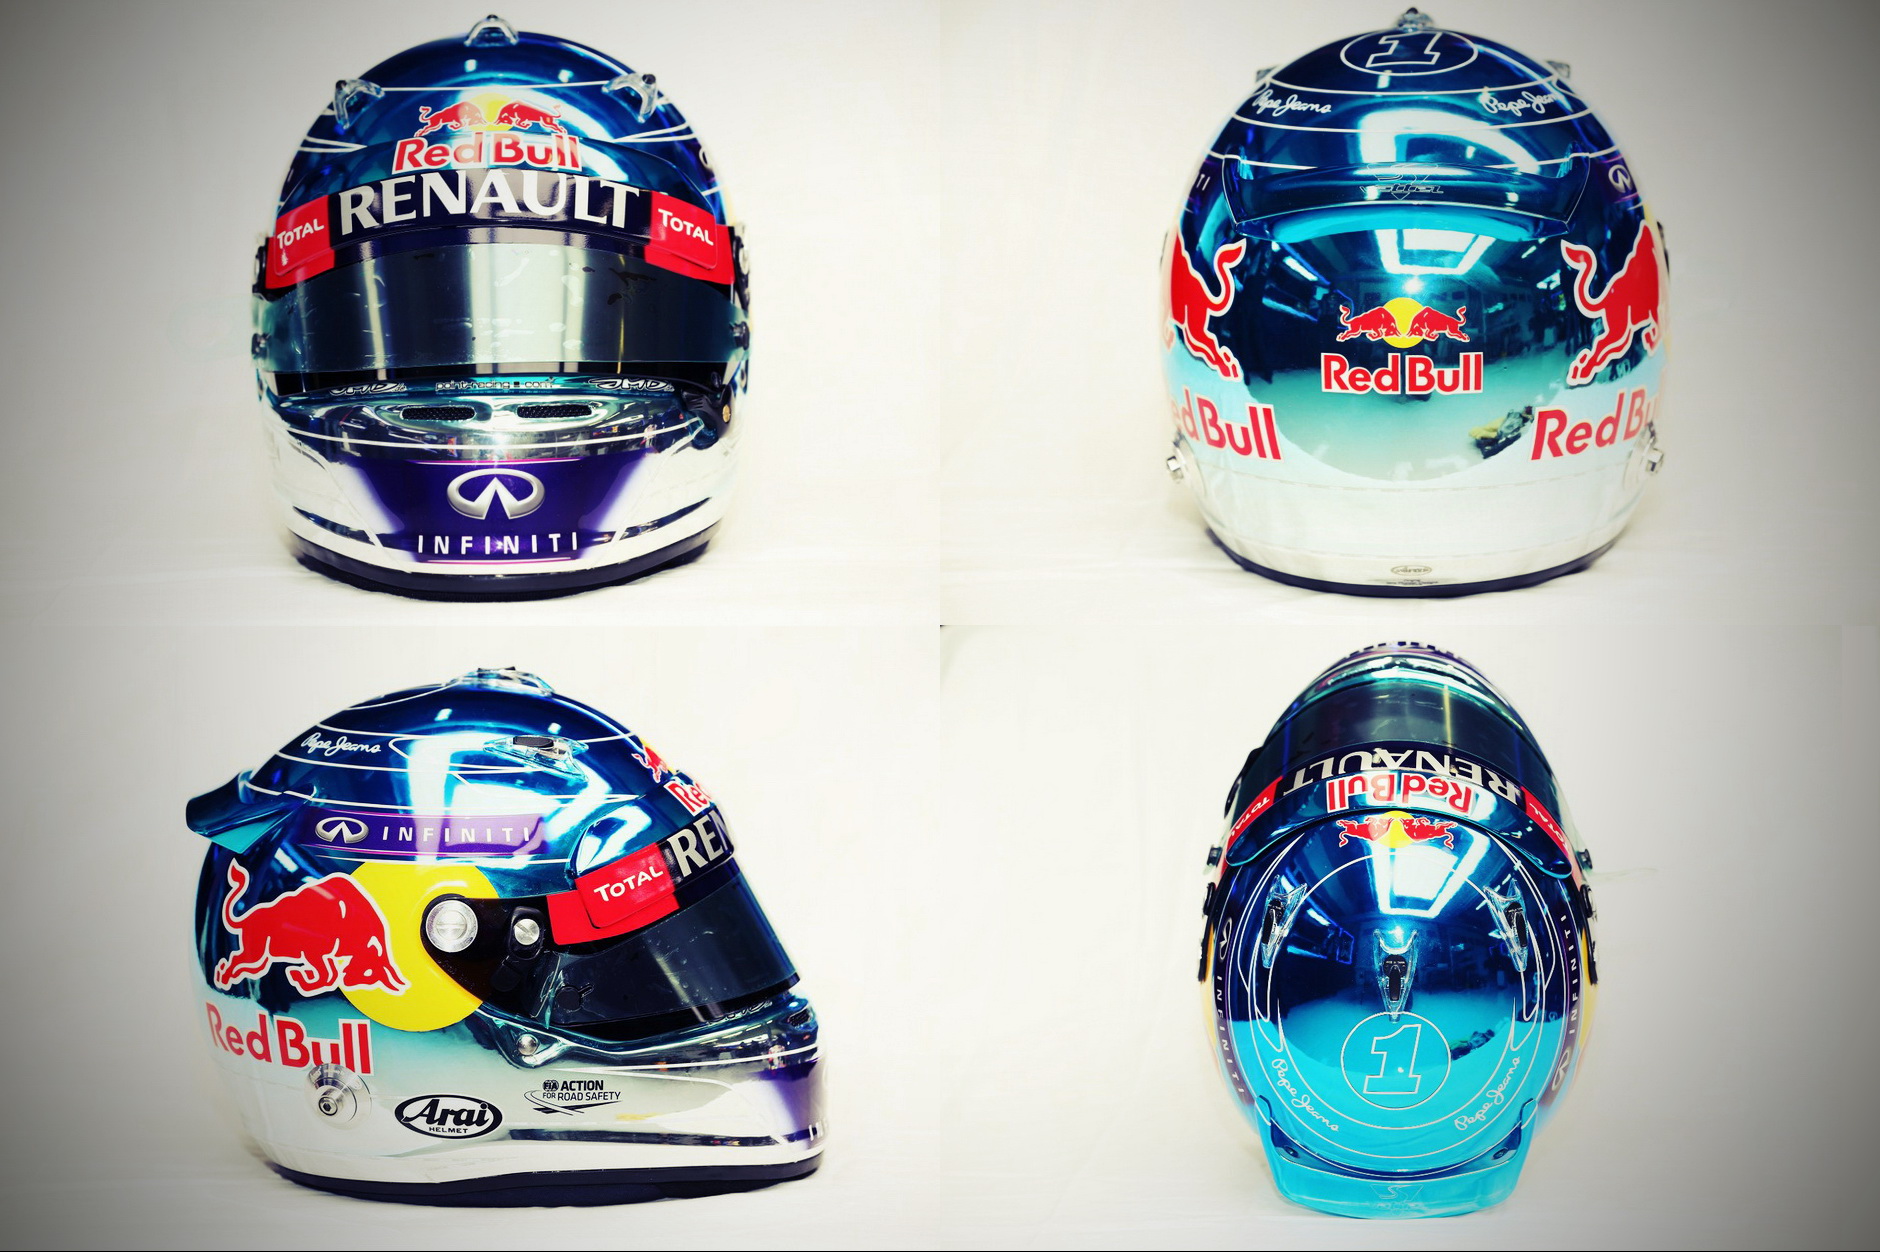 Шлем Себастьяна Феттеля на сезон 2014 года | 2014 helmet of Sebastian Vettel